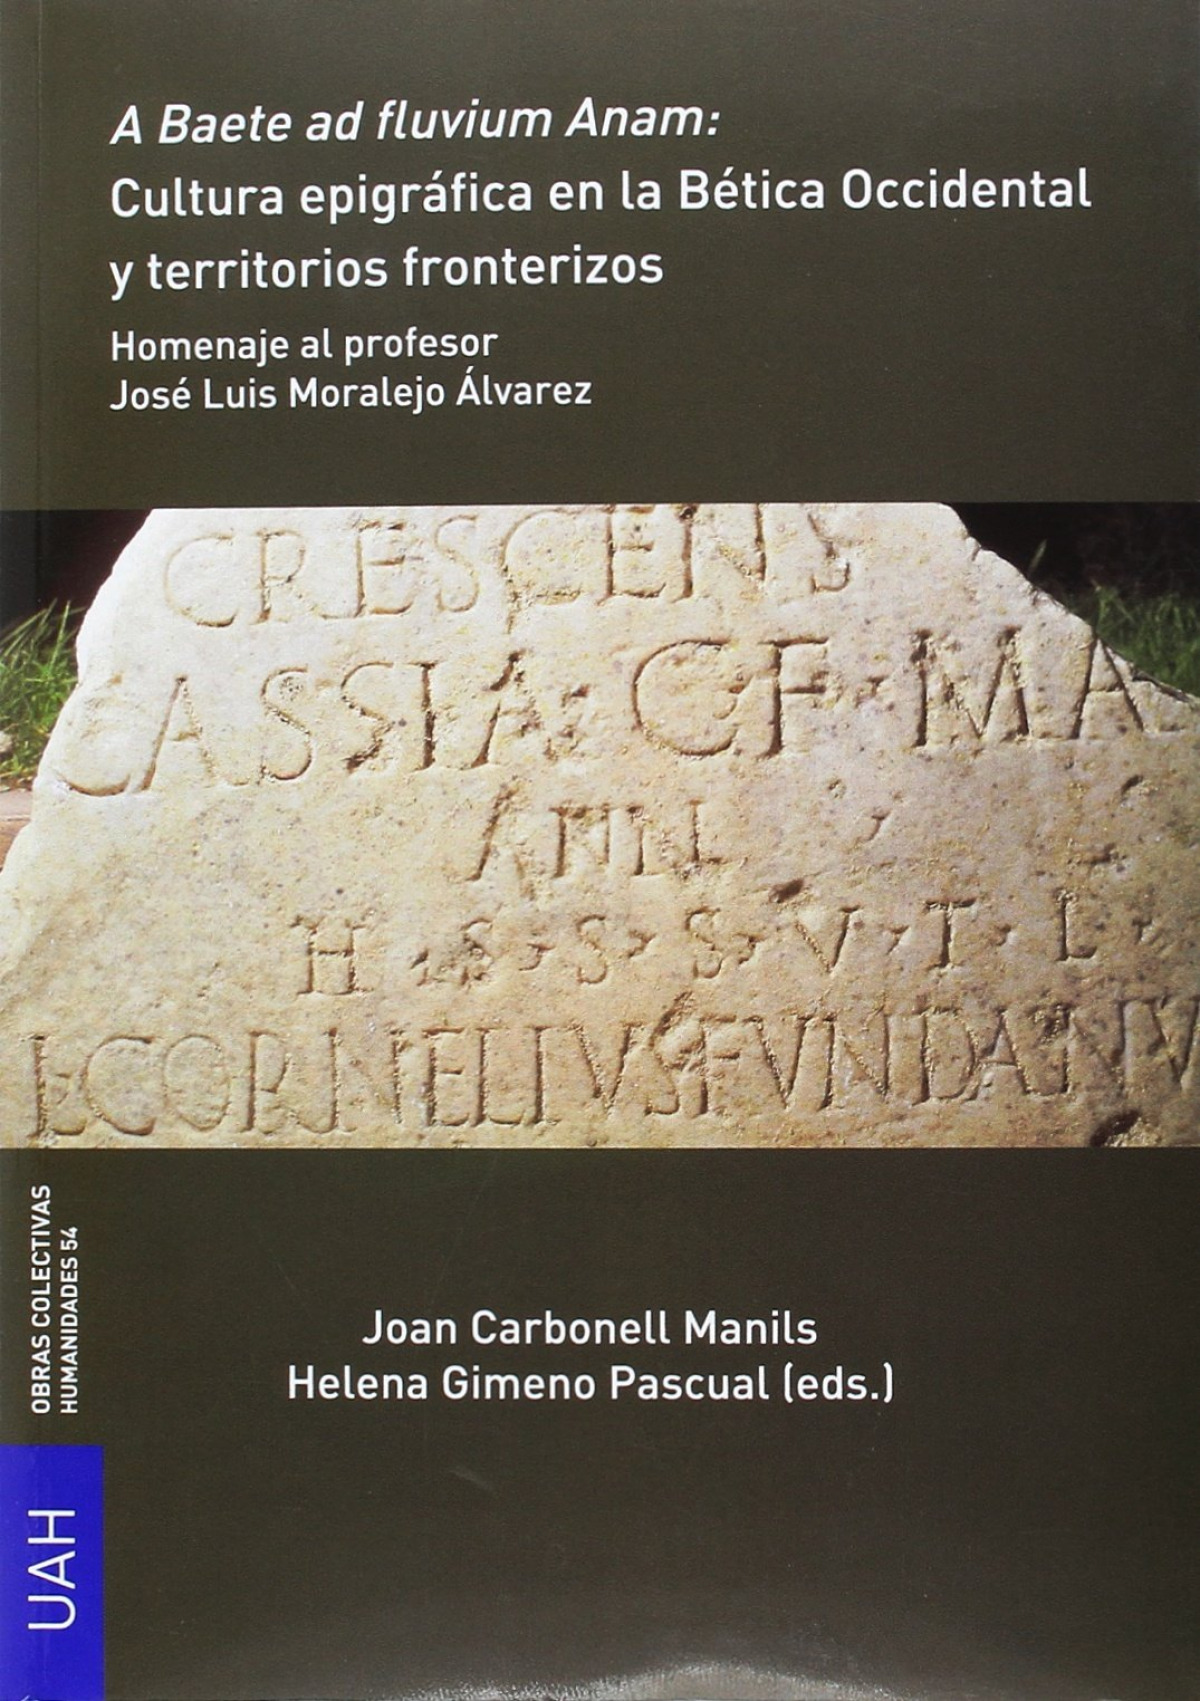 A Baete ad fluvium Anam: Cultura epigráfica en la Bética Occidental y - Carbonell Manils, Joaned. Lit./Gimeno Pascual, Helenaed. Lit.